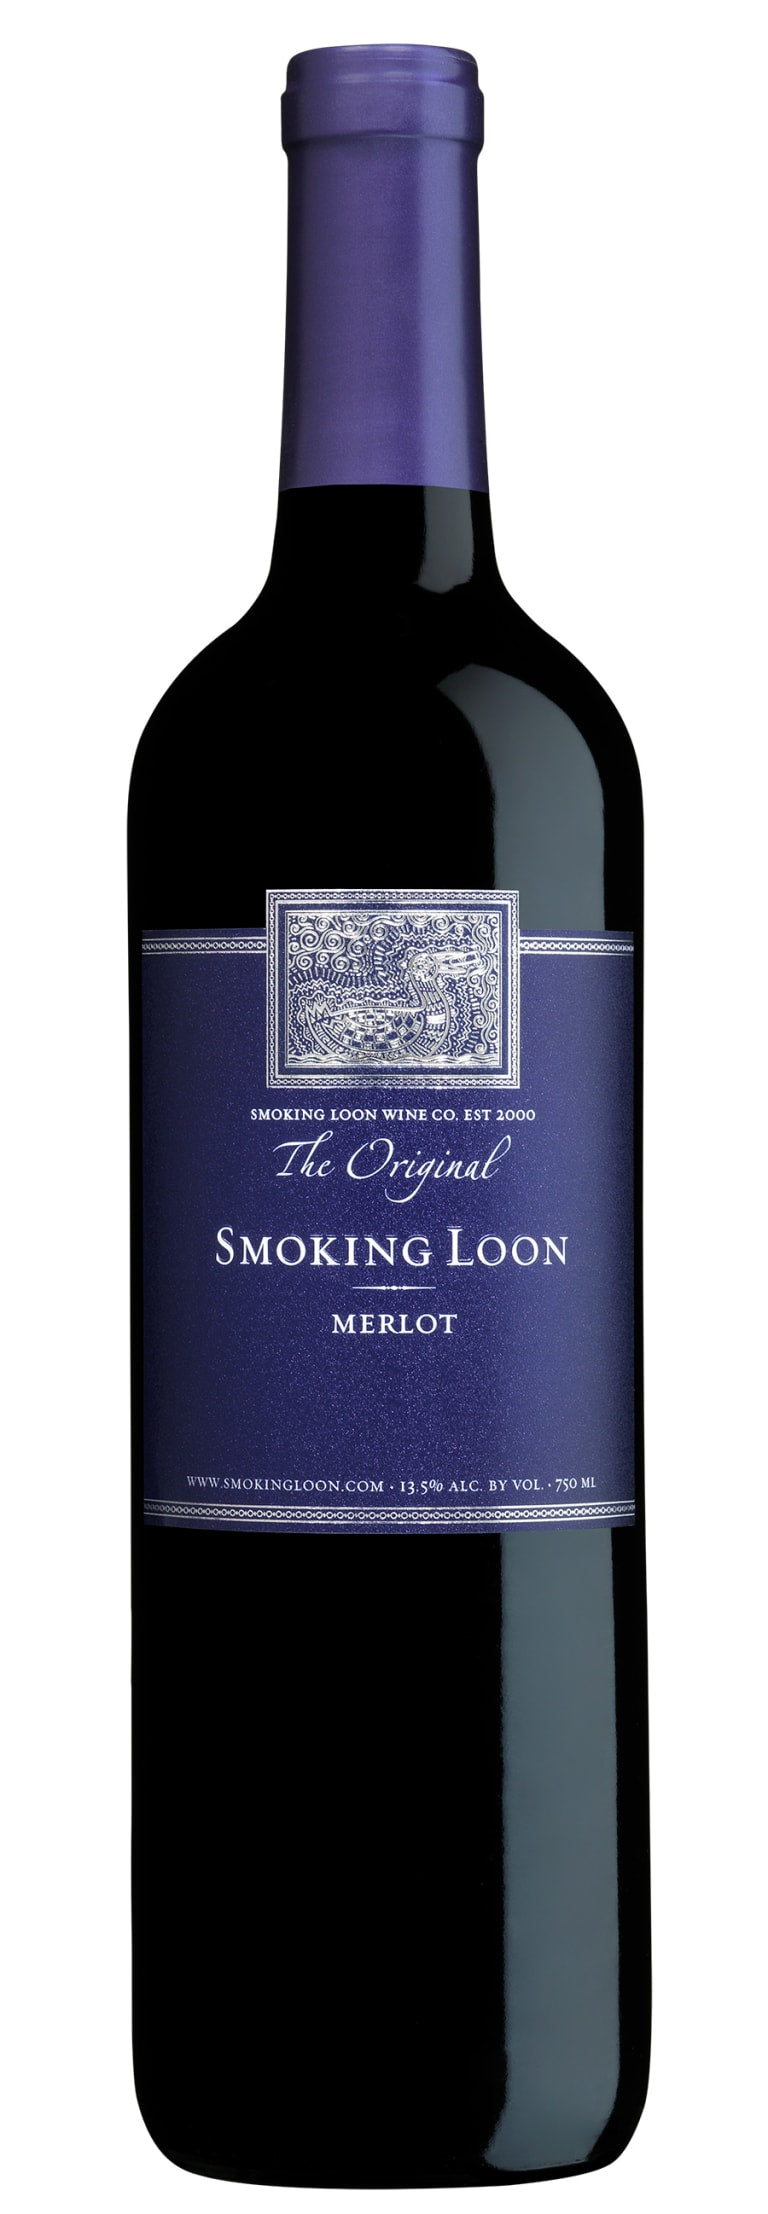 Smoking Loon Merlot 2017